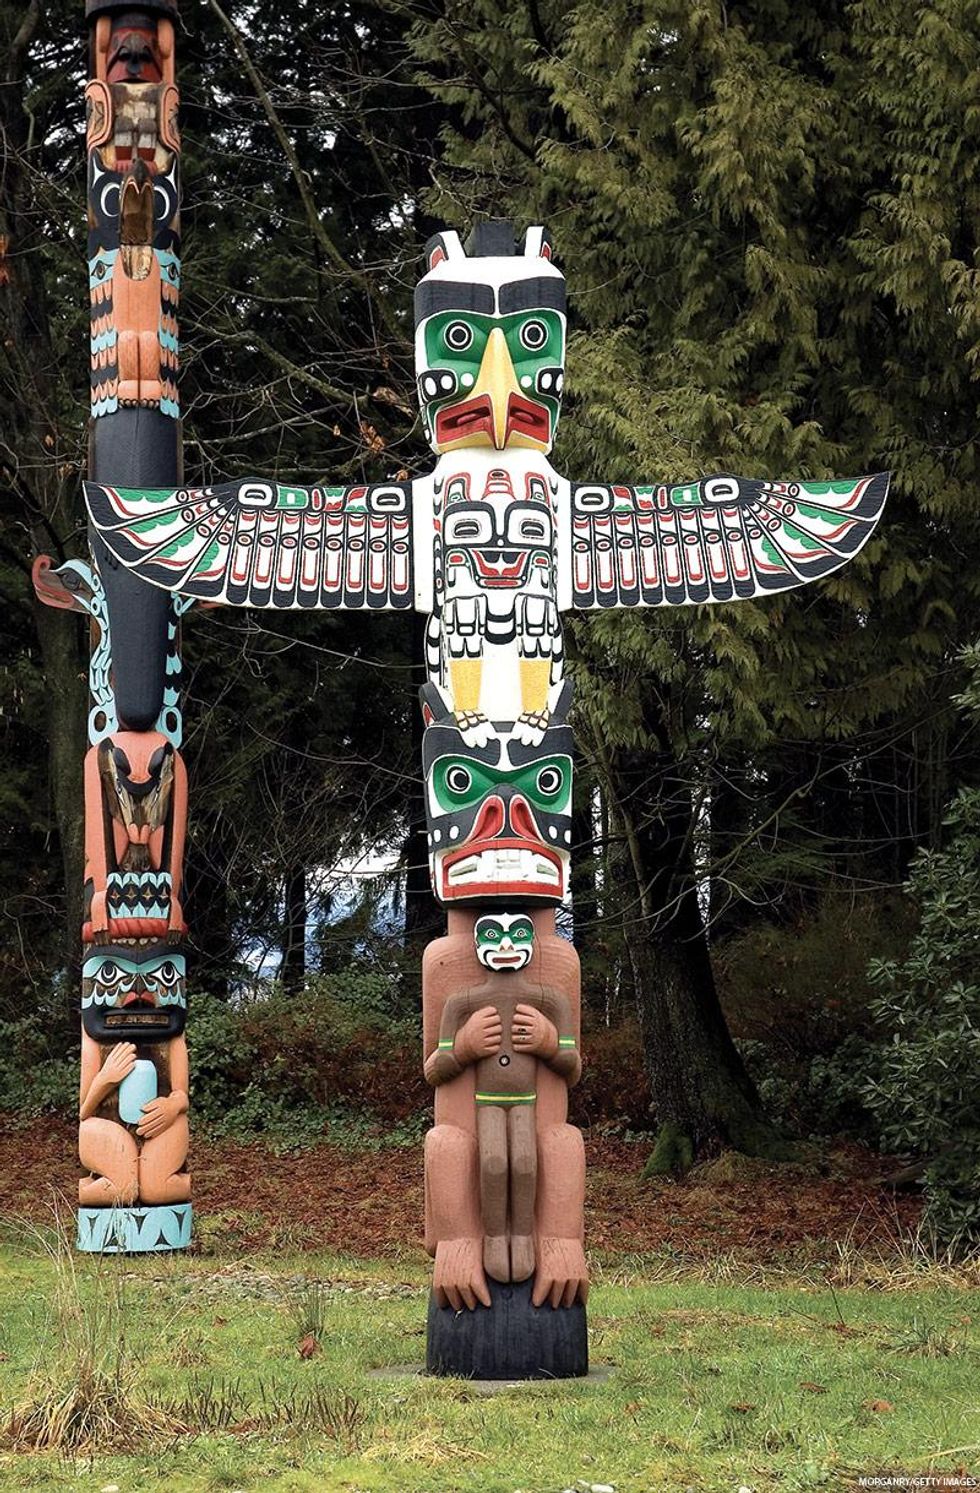 Totem poles in Vancouver British Columbia\u2019s Stanley Park